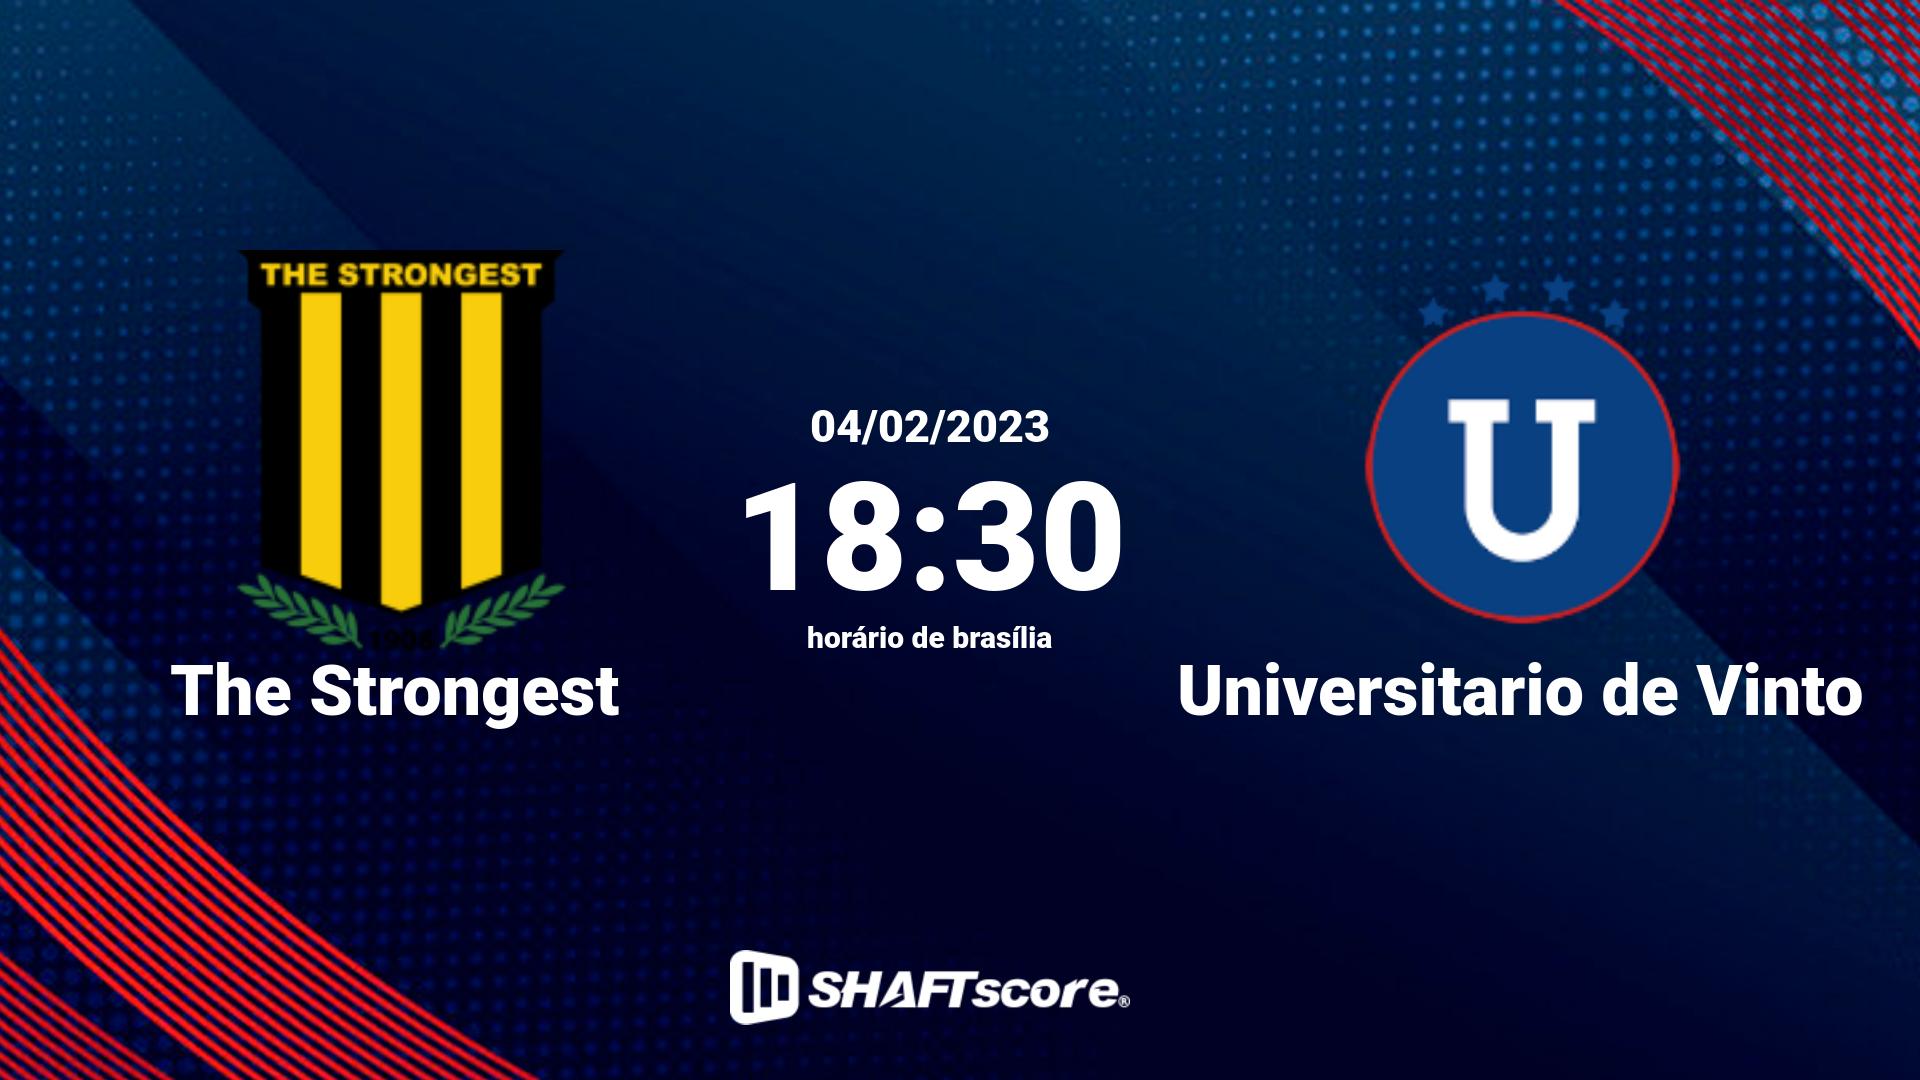 Estatísticas do jogo The Strongest vs Universitario de Vinto 04.02 18:30